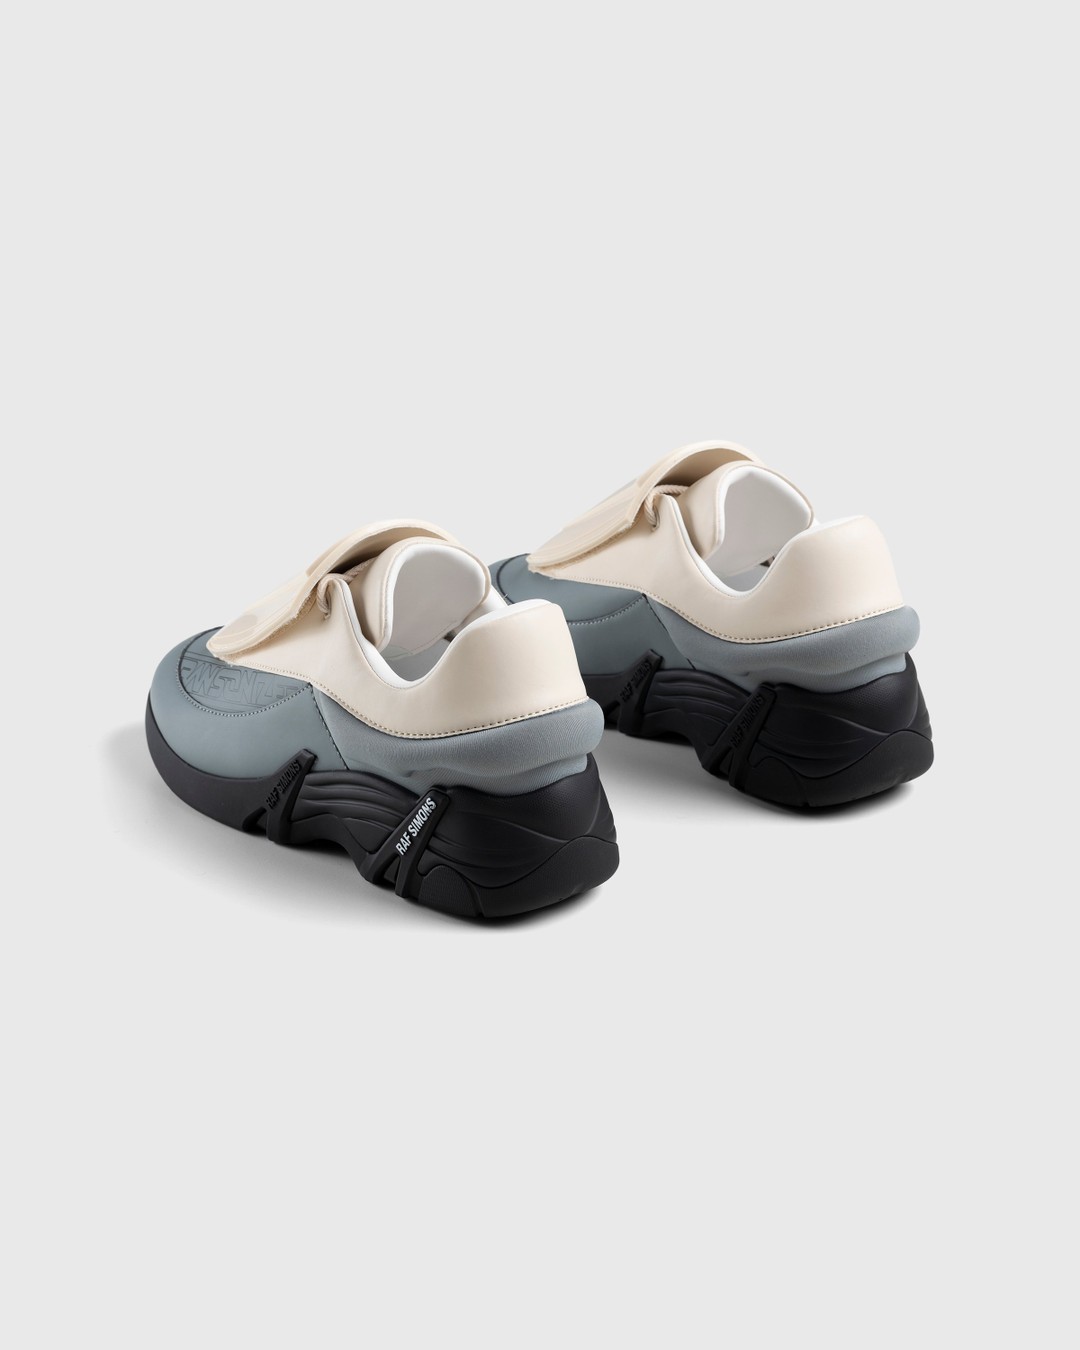 Raf Simons – Antei Cream/Grey - Sneakers - Grey - Image 4